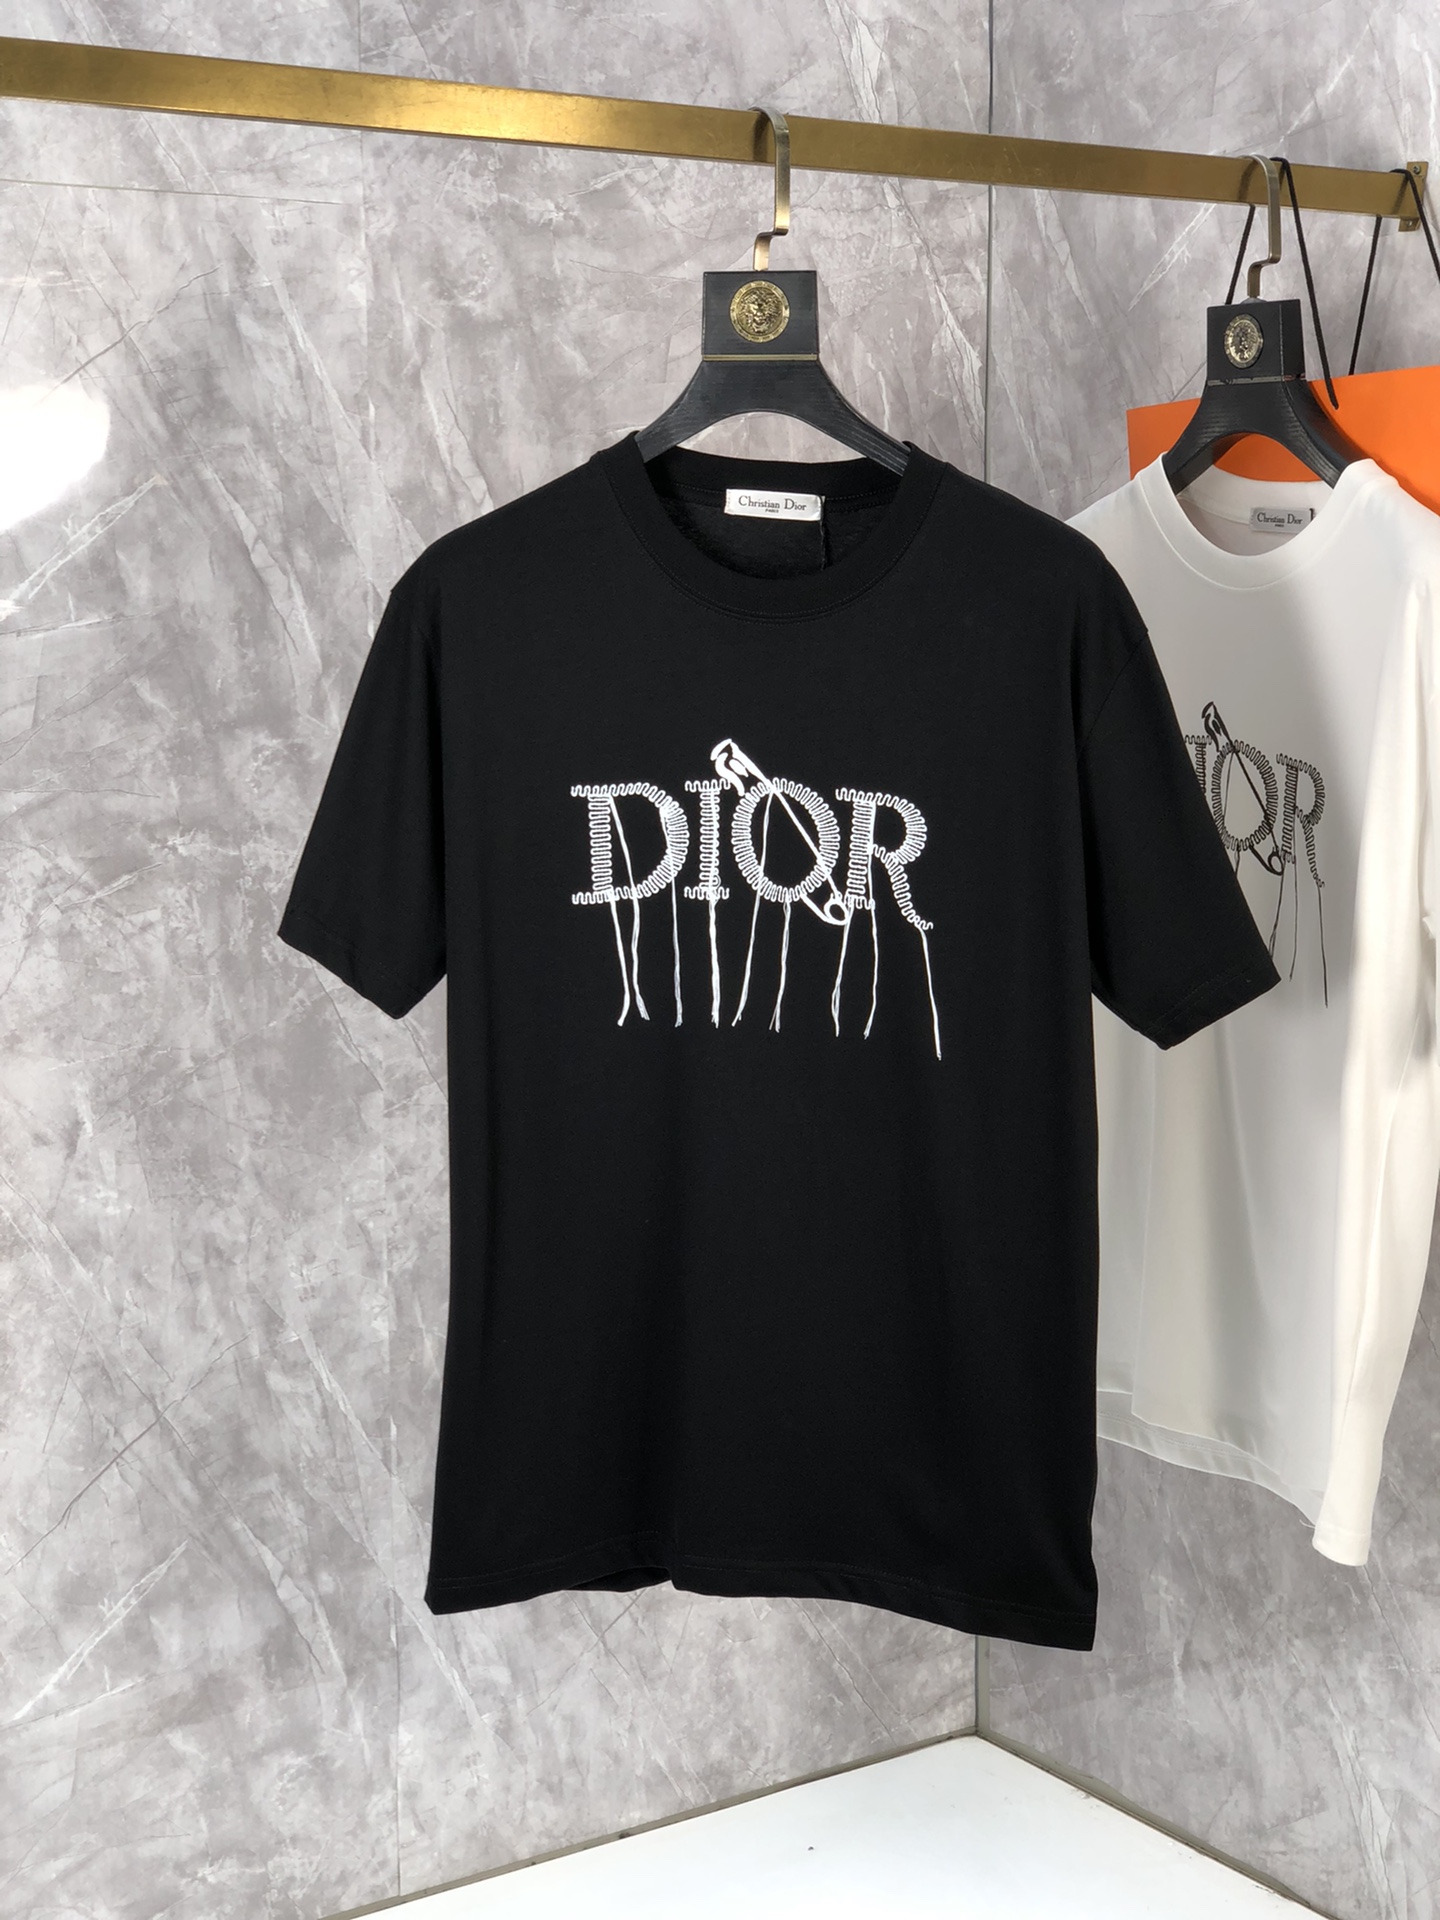 Dior Clothing T-Shirt Cotton Fashion Short Sleeve